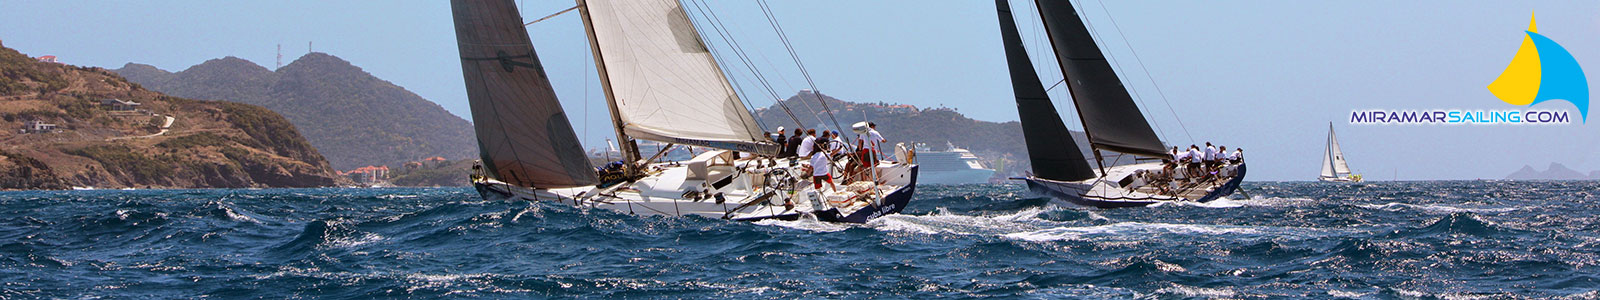 caribbean yacht racing calendar